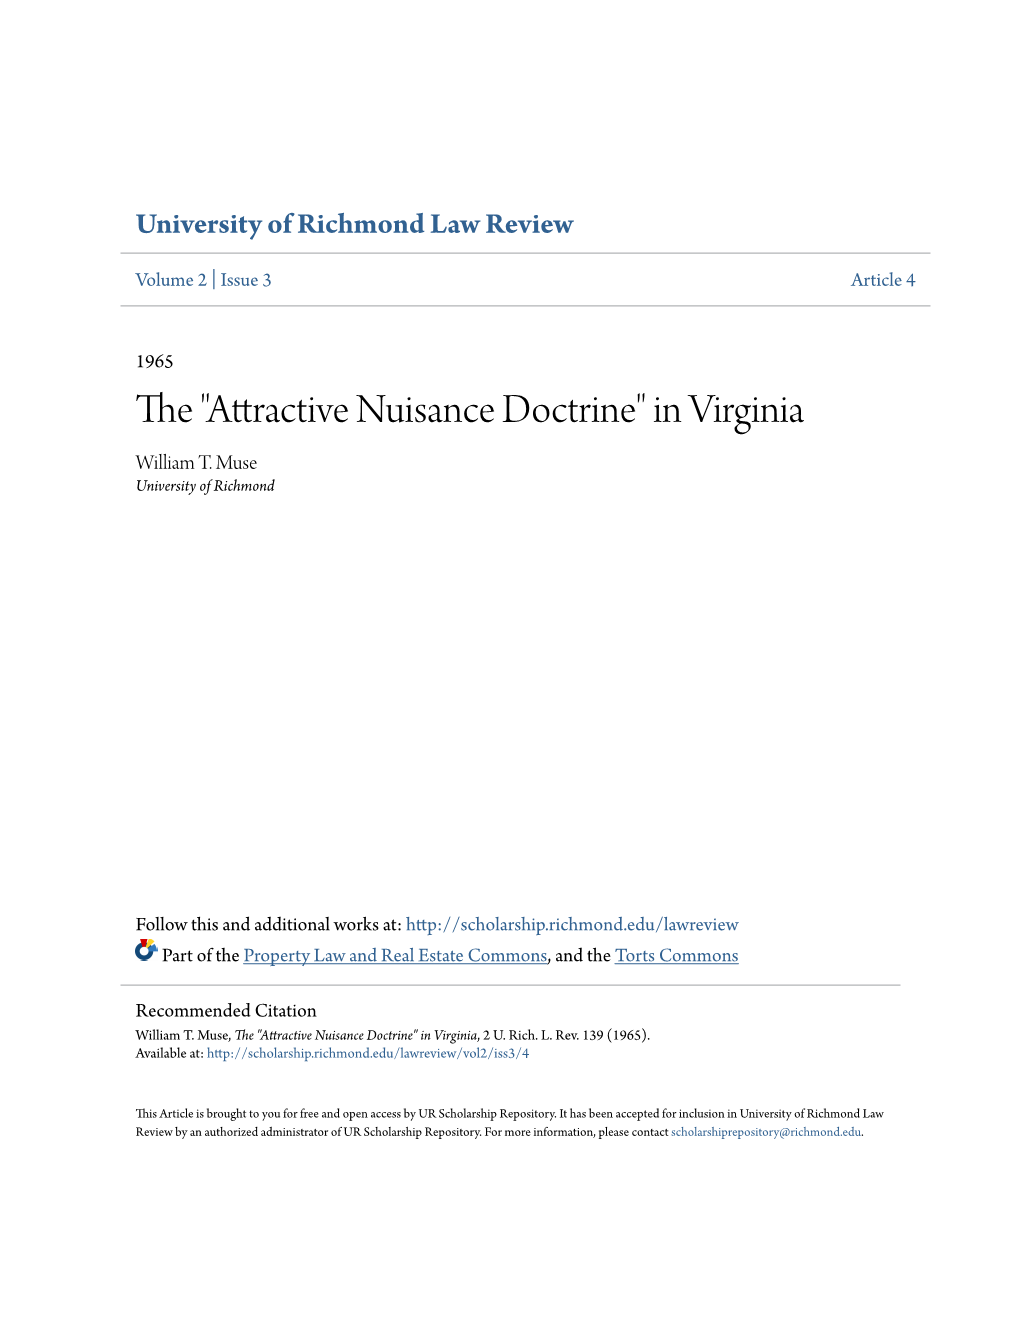 Attractive Nuisance Doctrine" in Virginia, 2 U